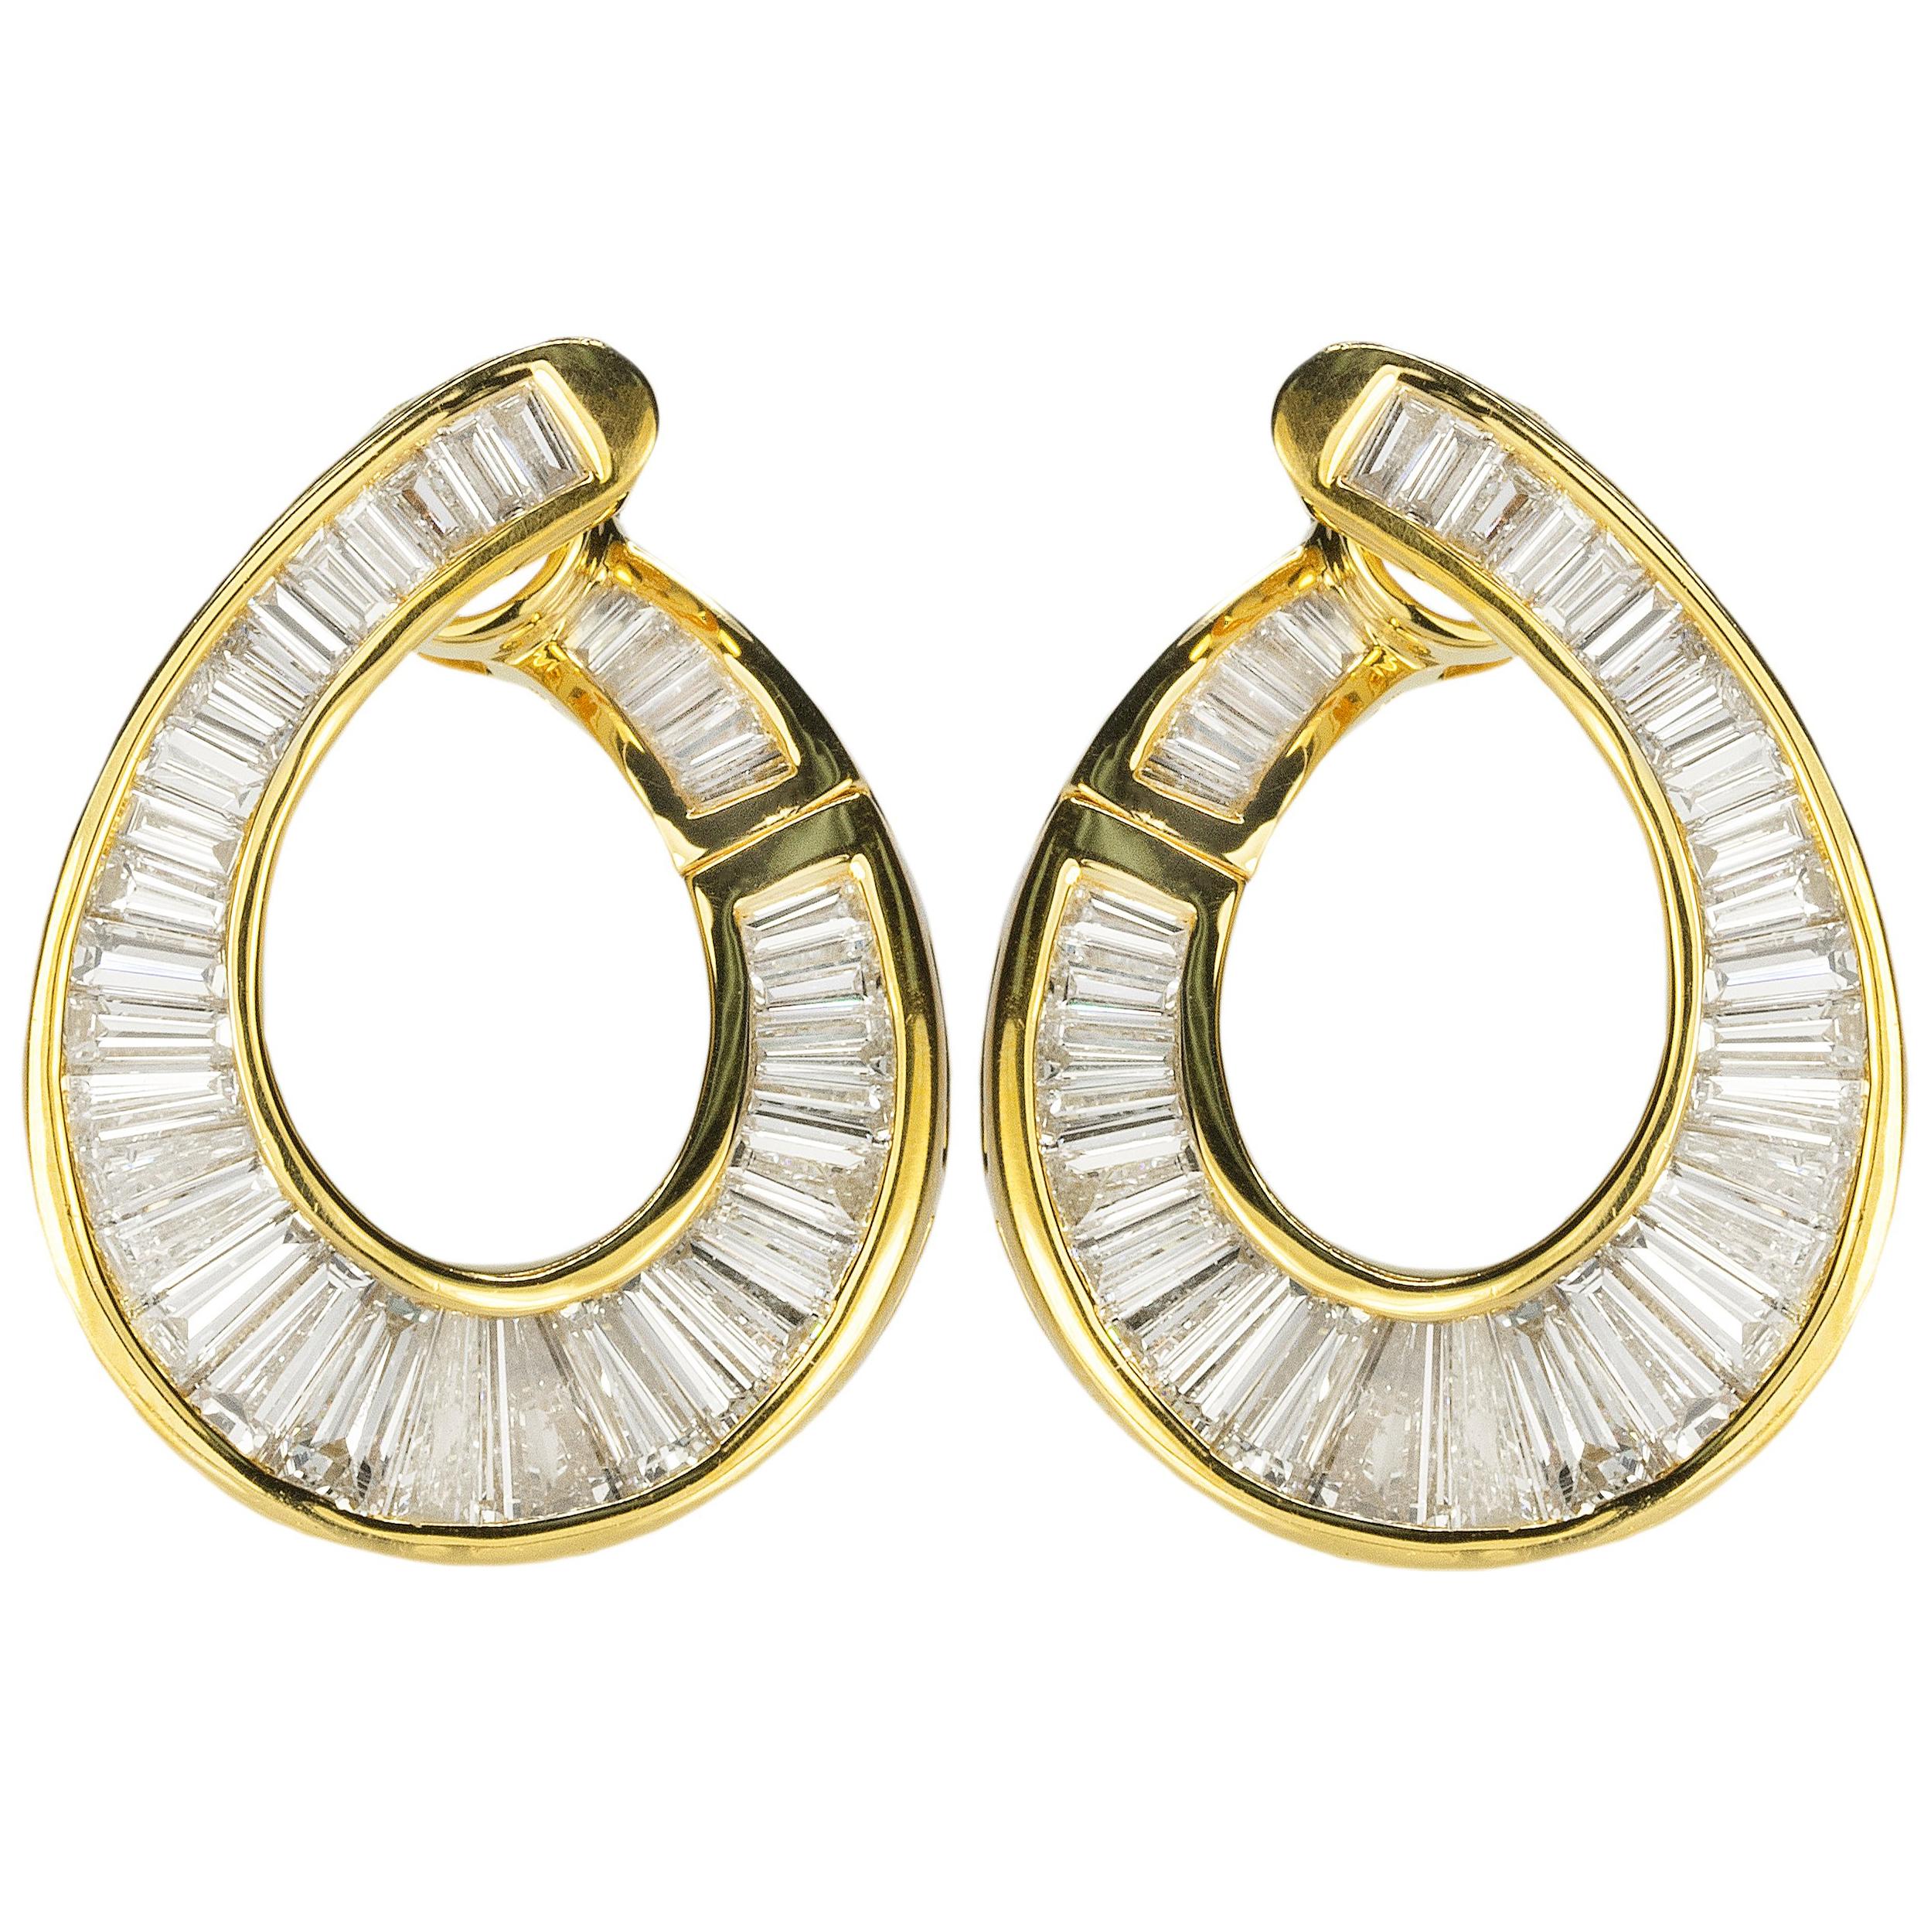 Stunning 18 Karat Baguette Diamond Earrings